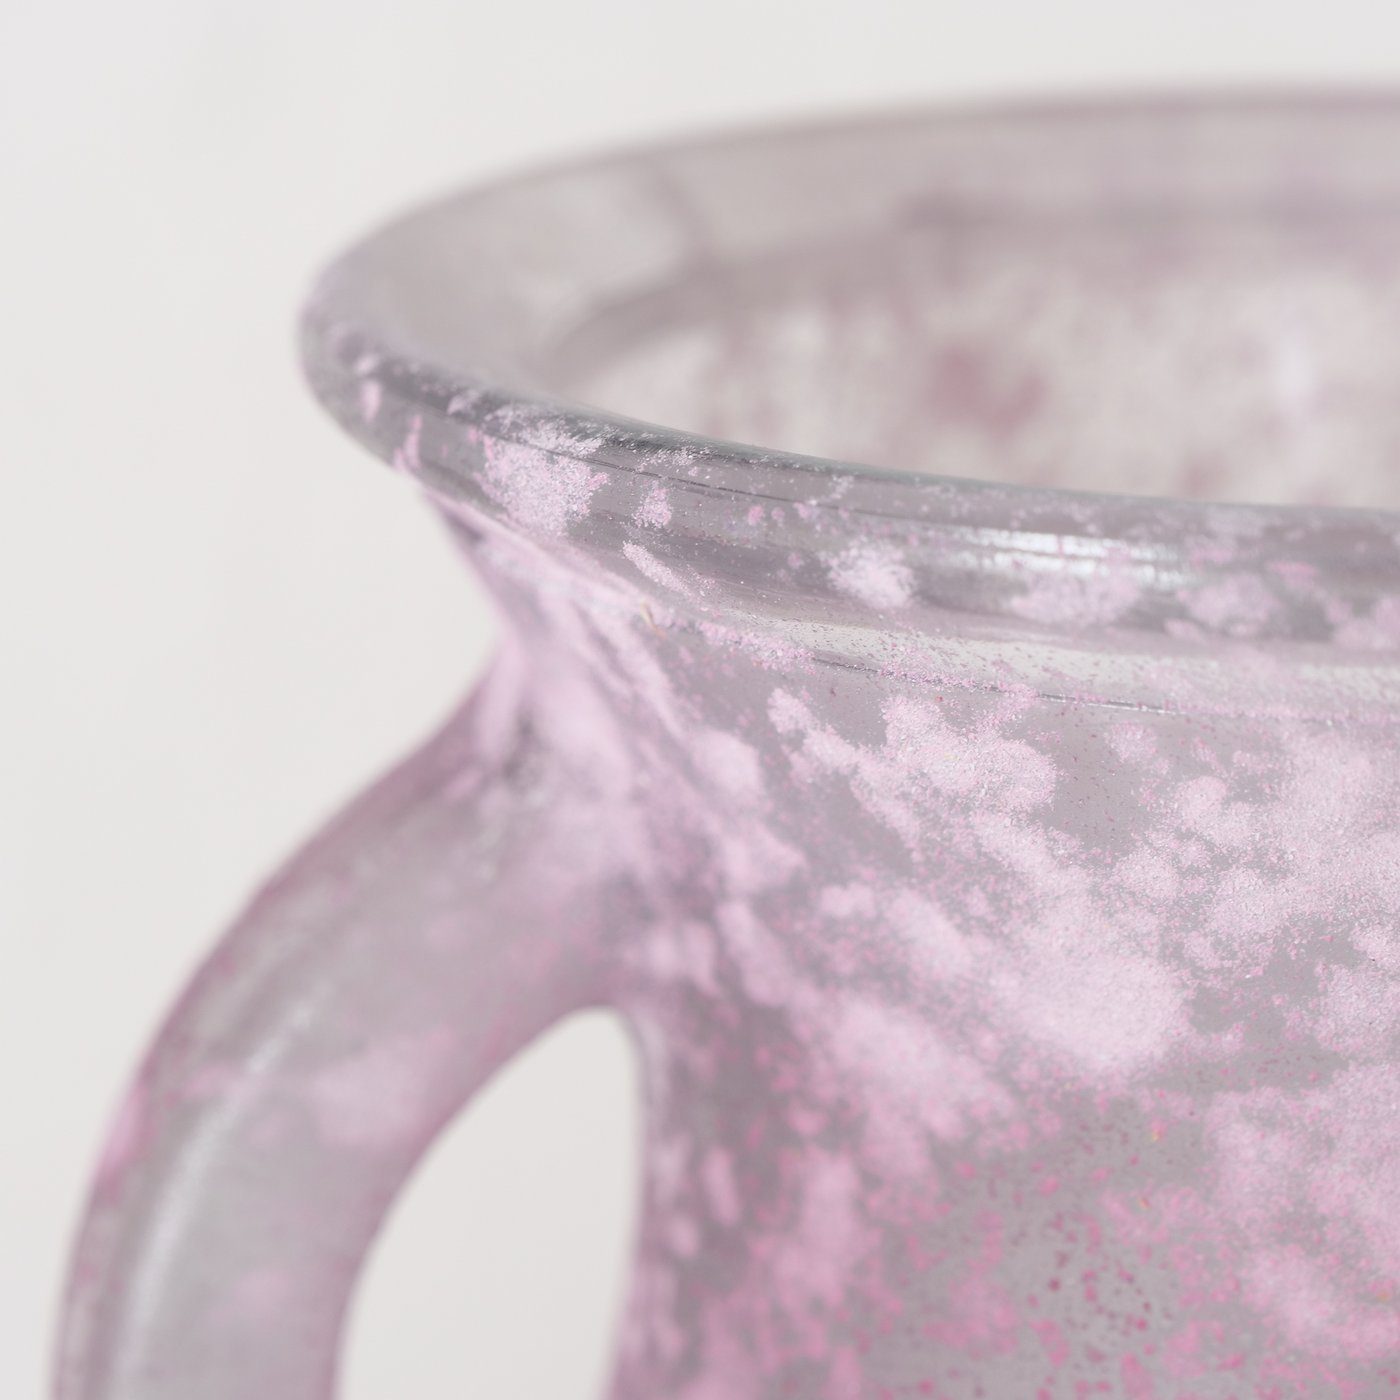 2er Glas lila/rosa, Set aus Vase Blumenvase Dekovase BOLTZE in "Pitcher"